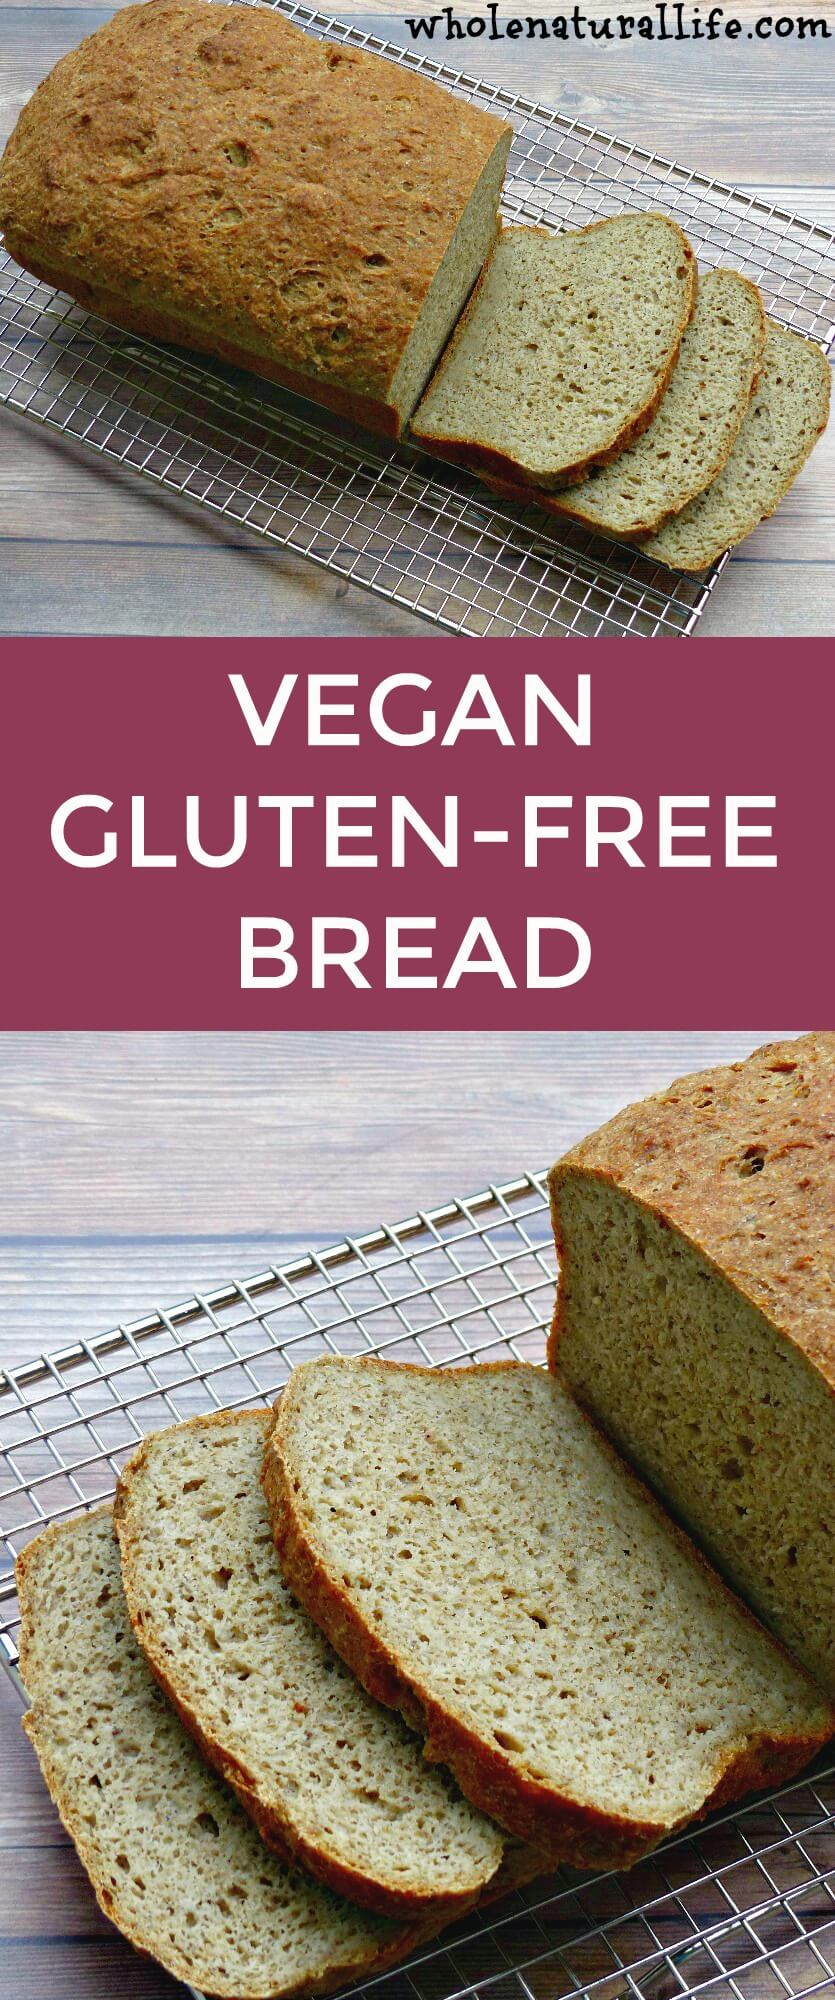 Gluten Free Dairy Free Bread Recipe Best Of Vegan Gluten Free Bread whole Natural Life